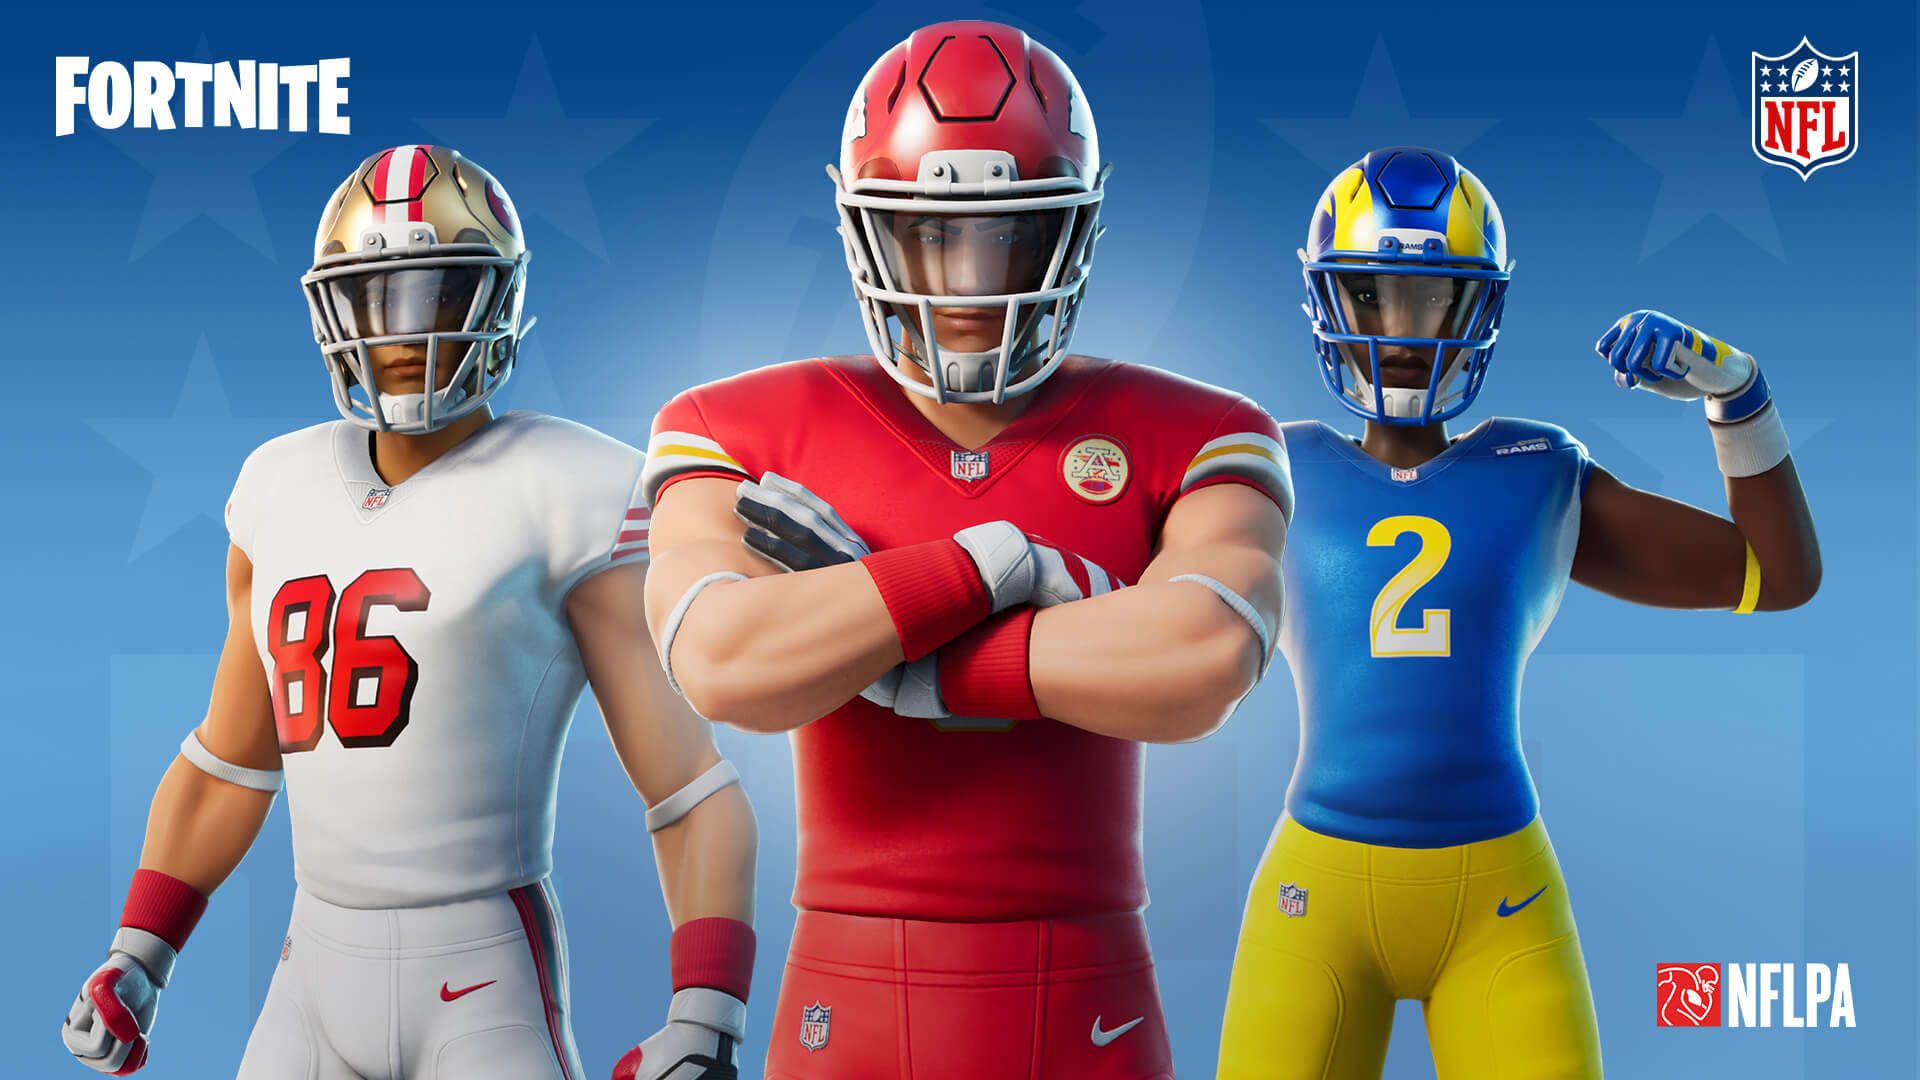 Fortnite adds new batch of NFL skins